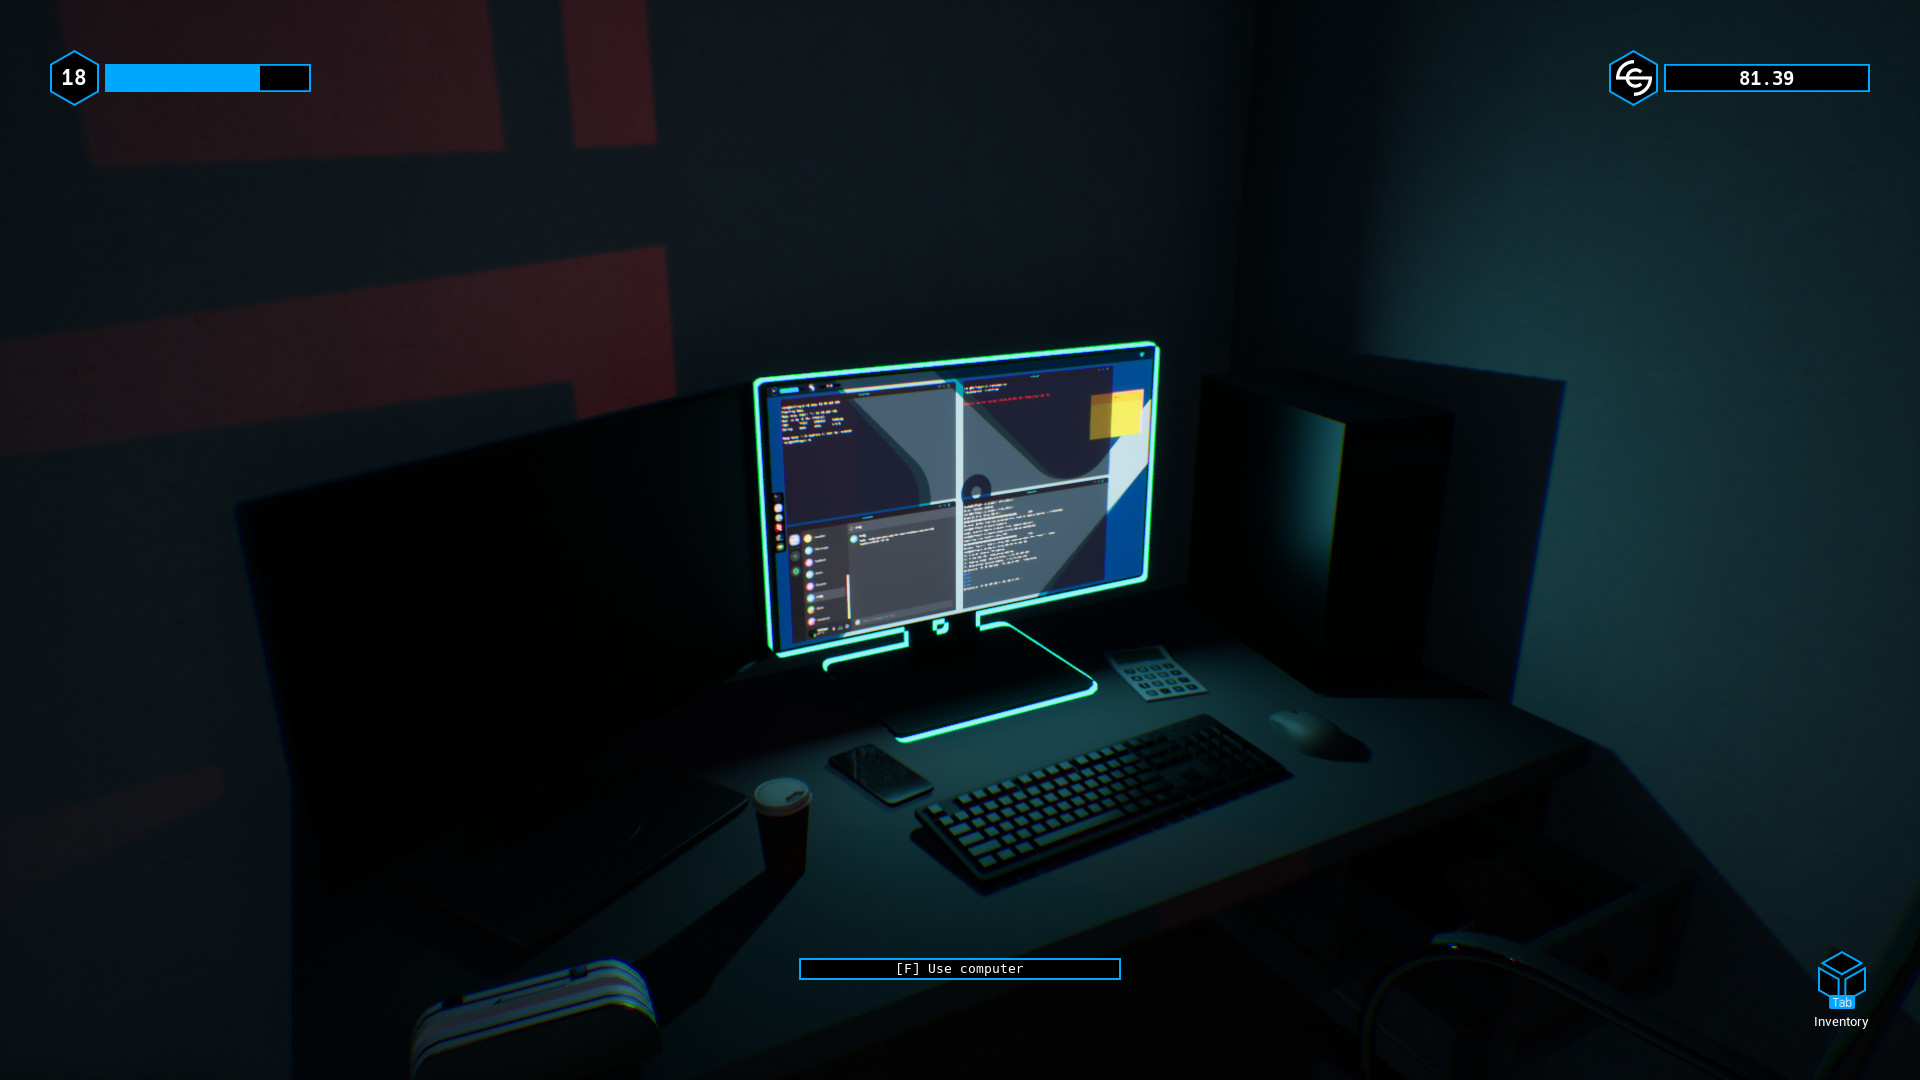 Hacker Simulator by StarGames. - Game Jolt